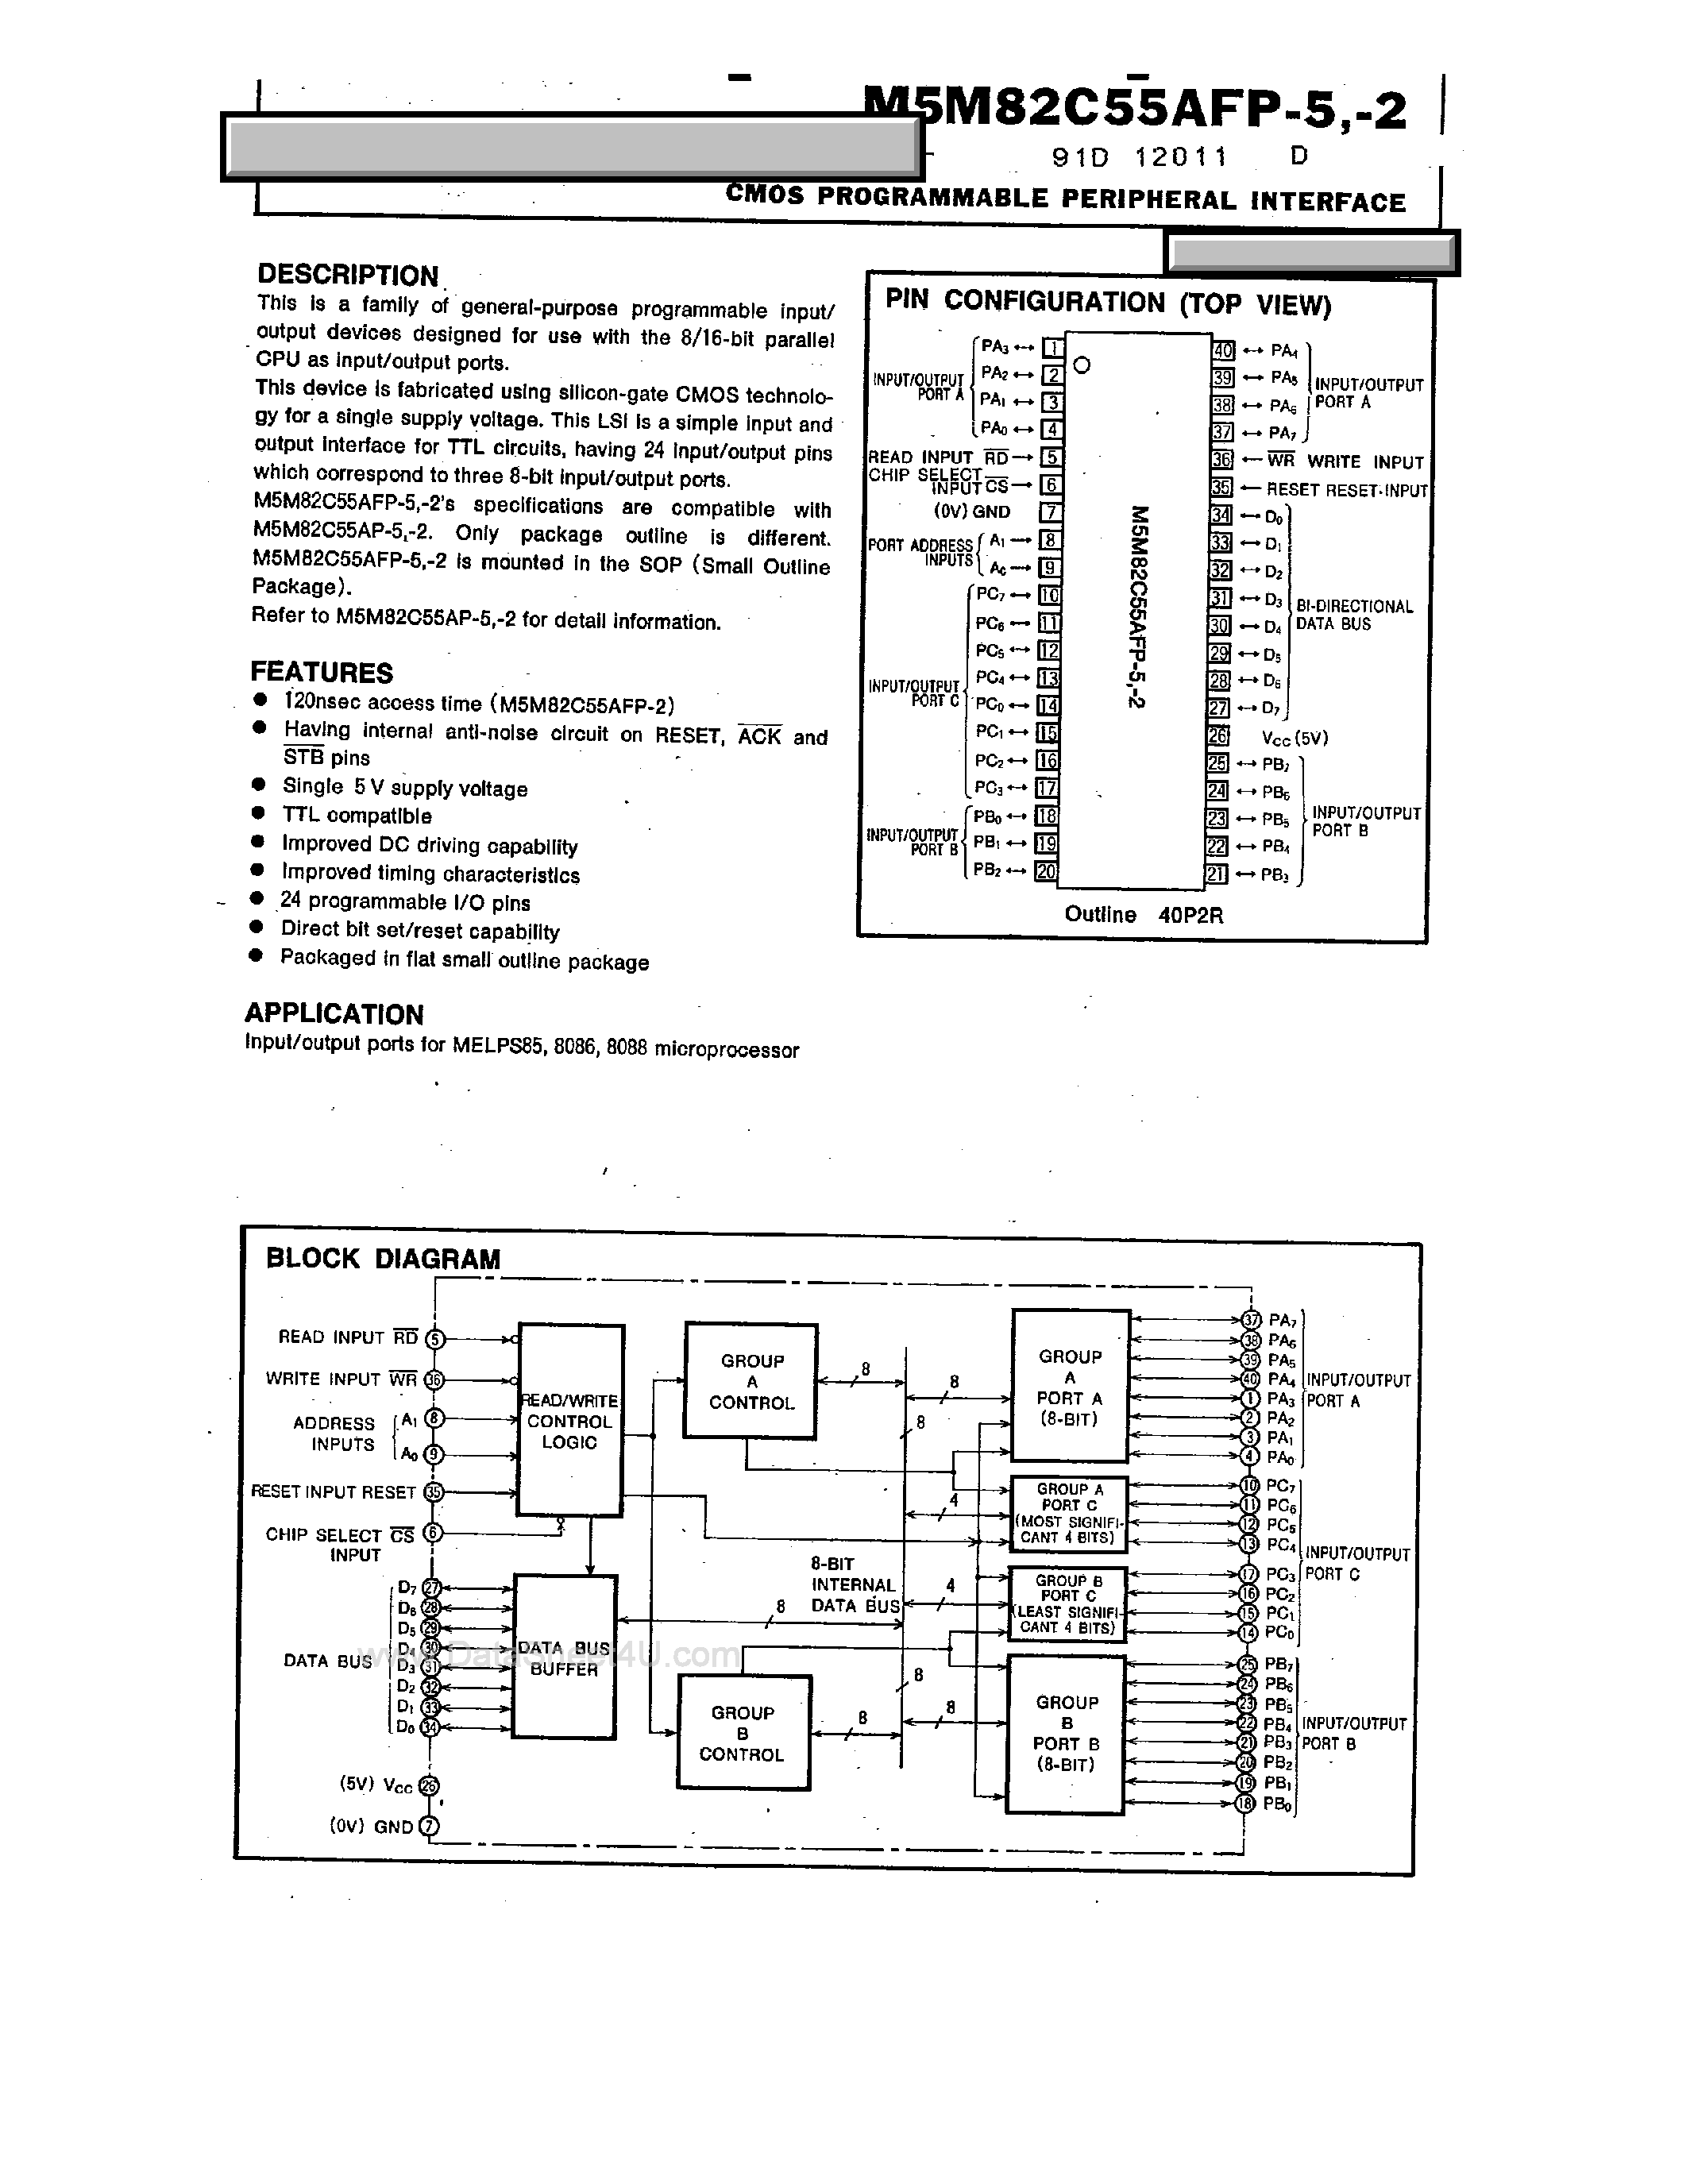 Datasheet M5M82C55AFP-2 - (M5M82C55AFP-2/-5) CMOS Programmable Peripheral Interface page 1